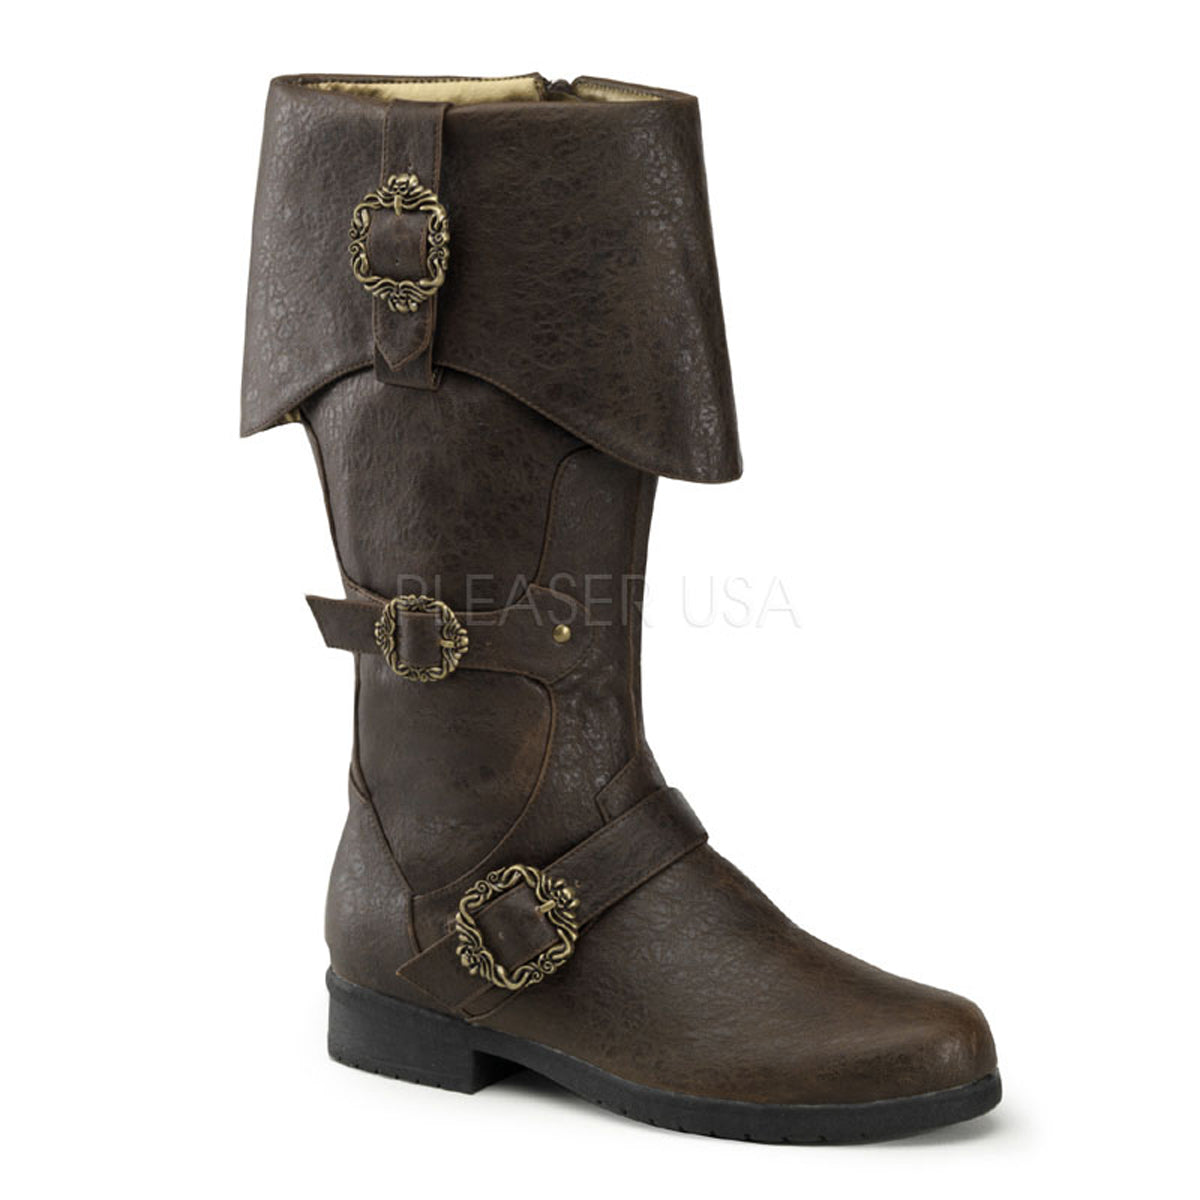 Funtasma Carribean-299 - Brown Pirate Boots | OtherWorld Shoes